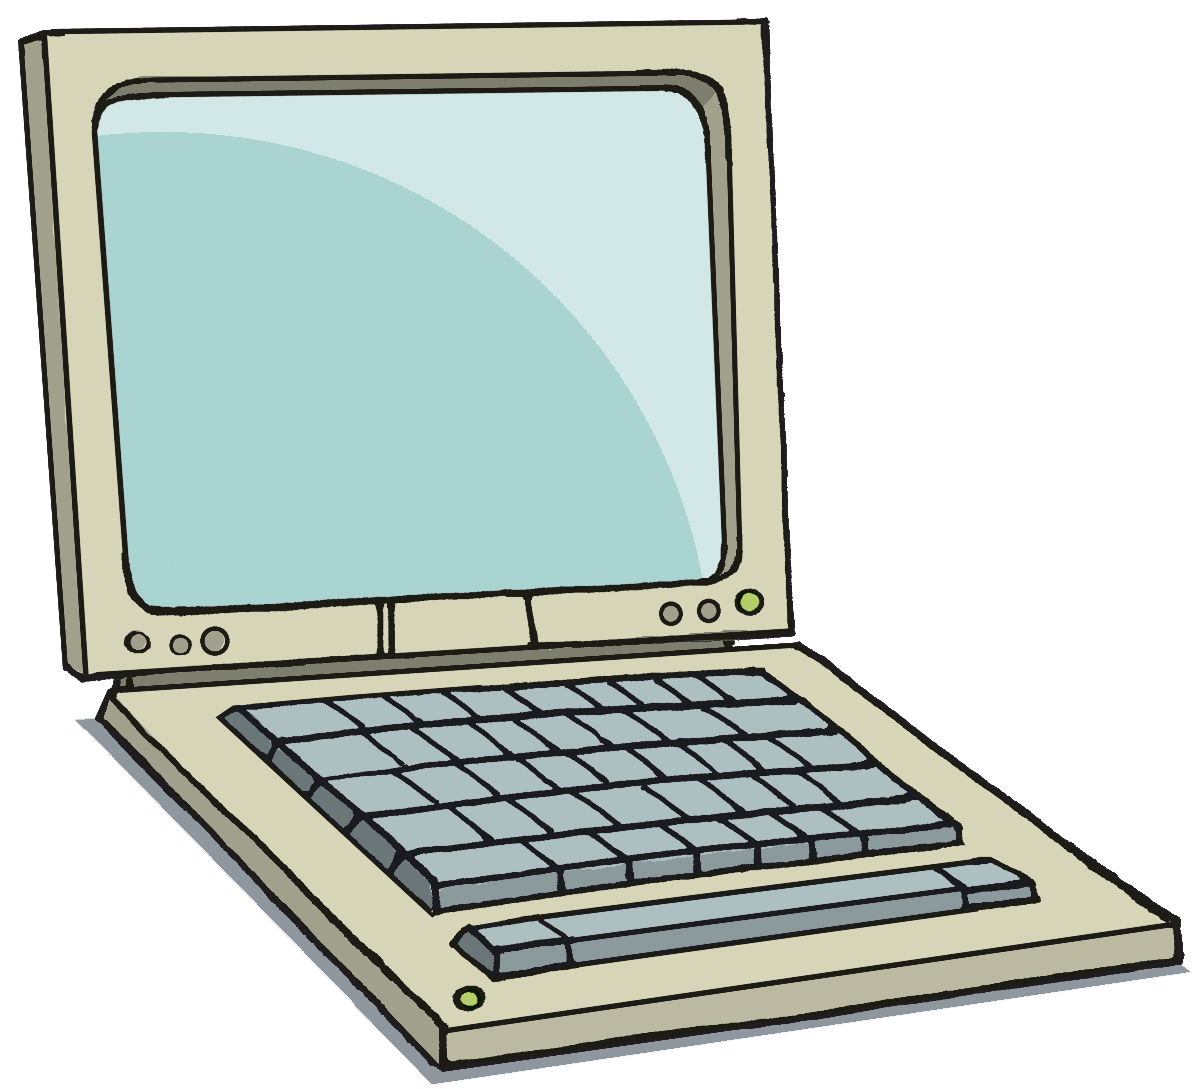 Clip art and laptop – ciij